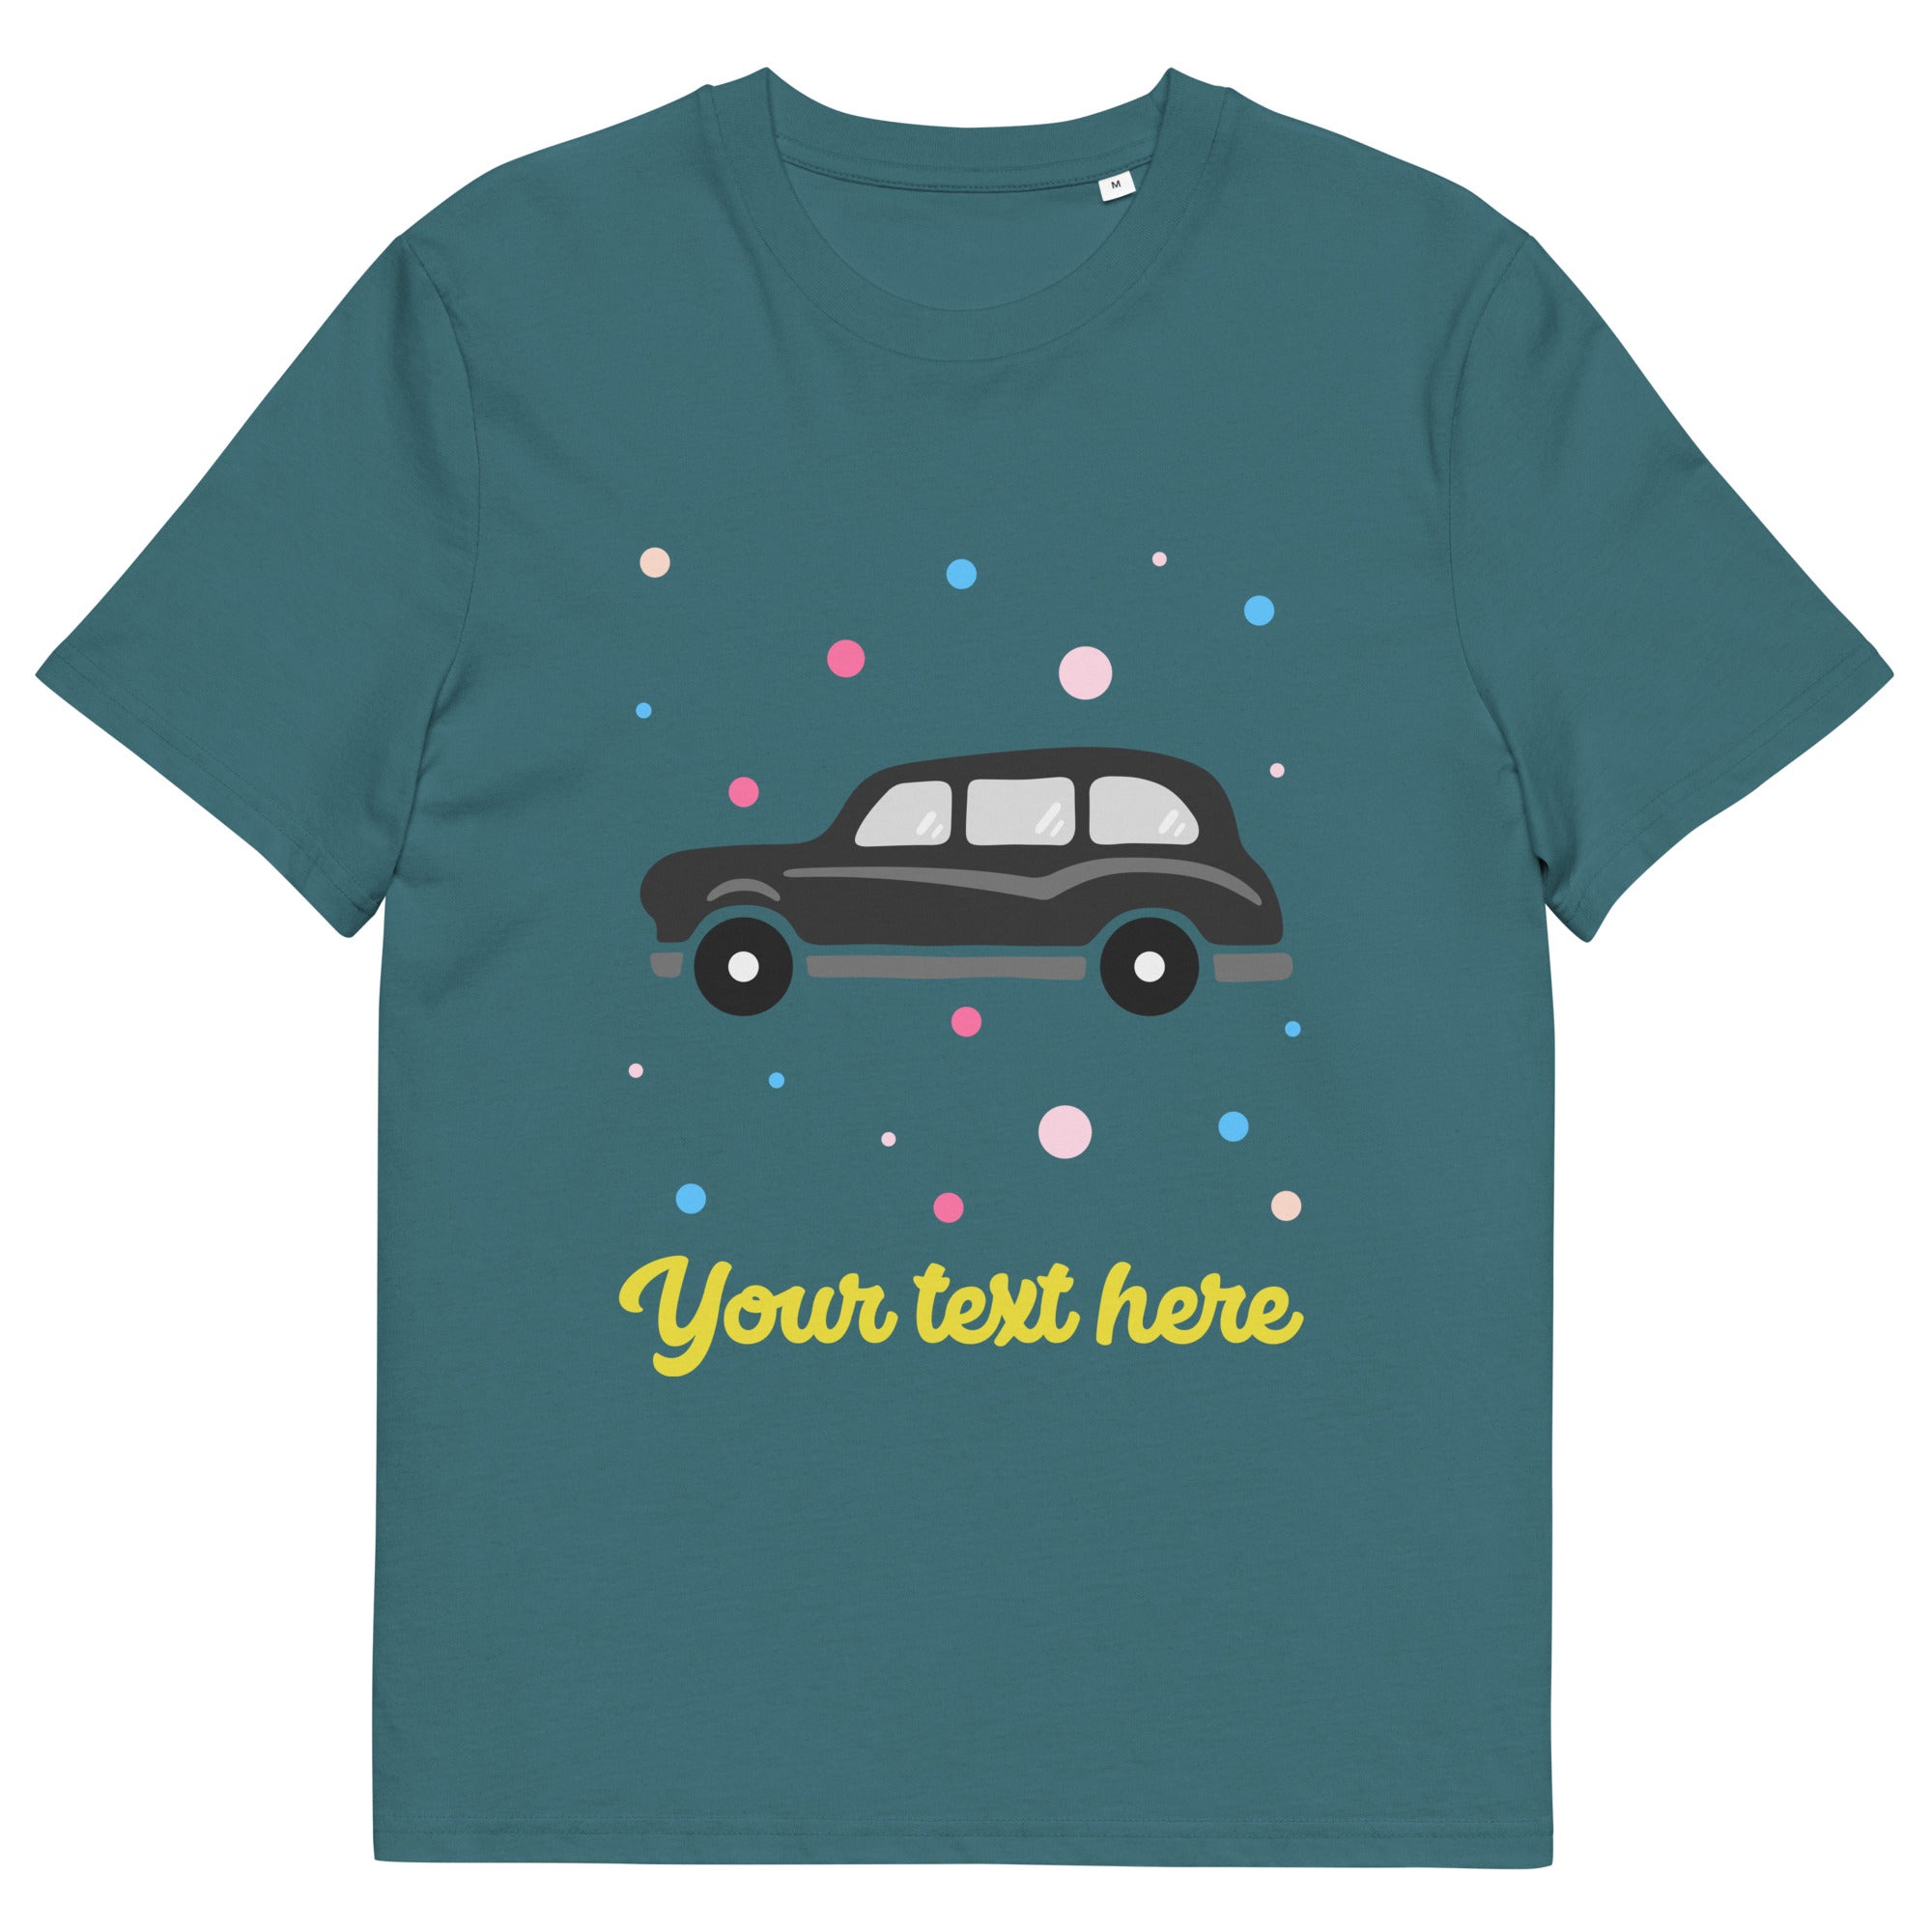 Personalised Custom Text - Organic Cotton Adults Unisex T-Shirt - London Doodles - Black Taxi - Stargazer